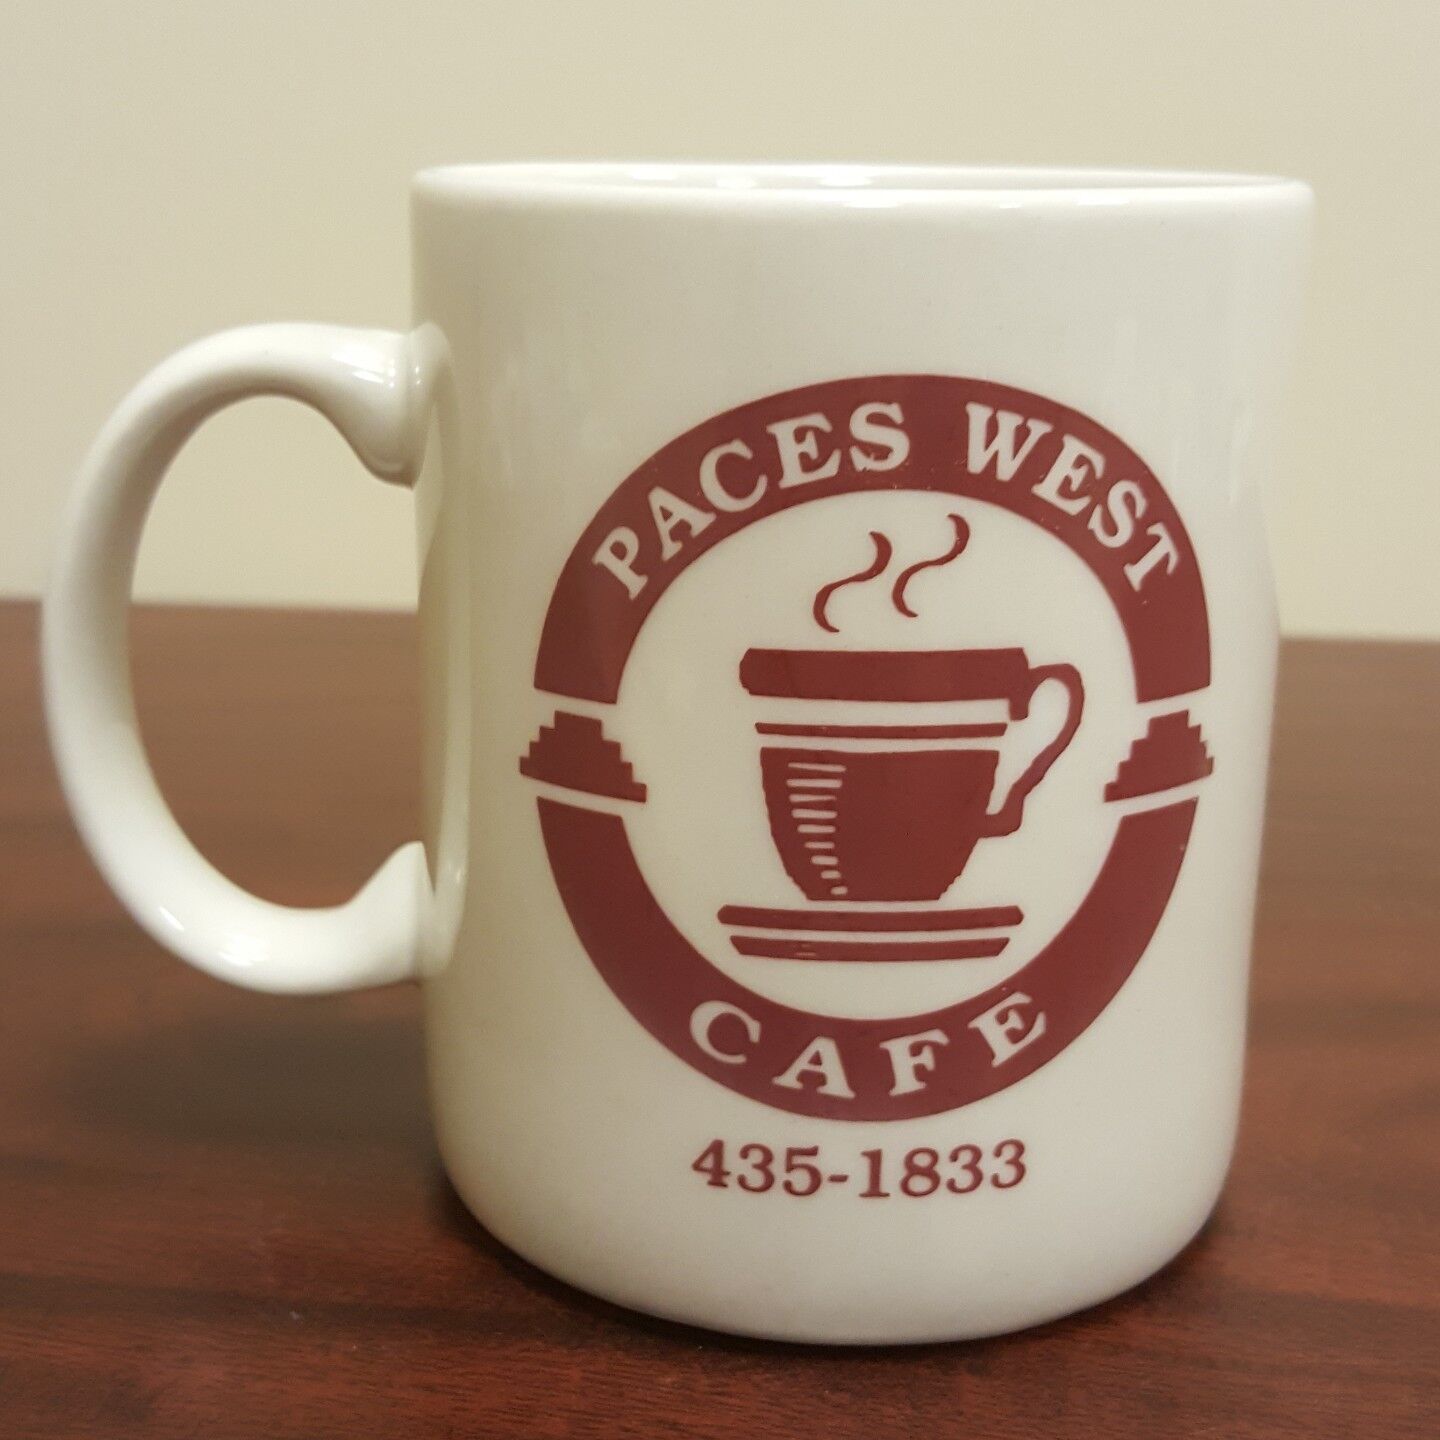 Paces West Cafe Coffee Mug Retired Atlanta Company